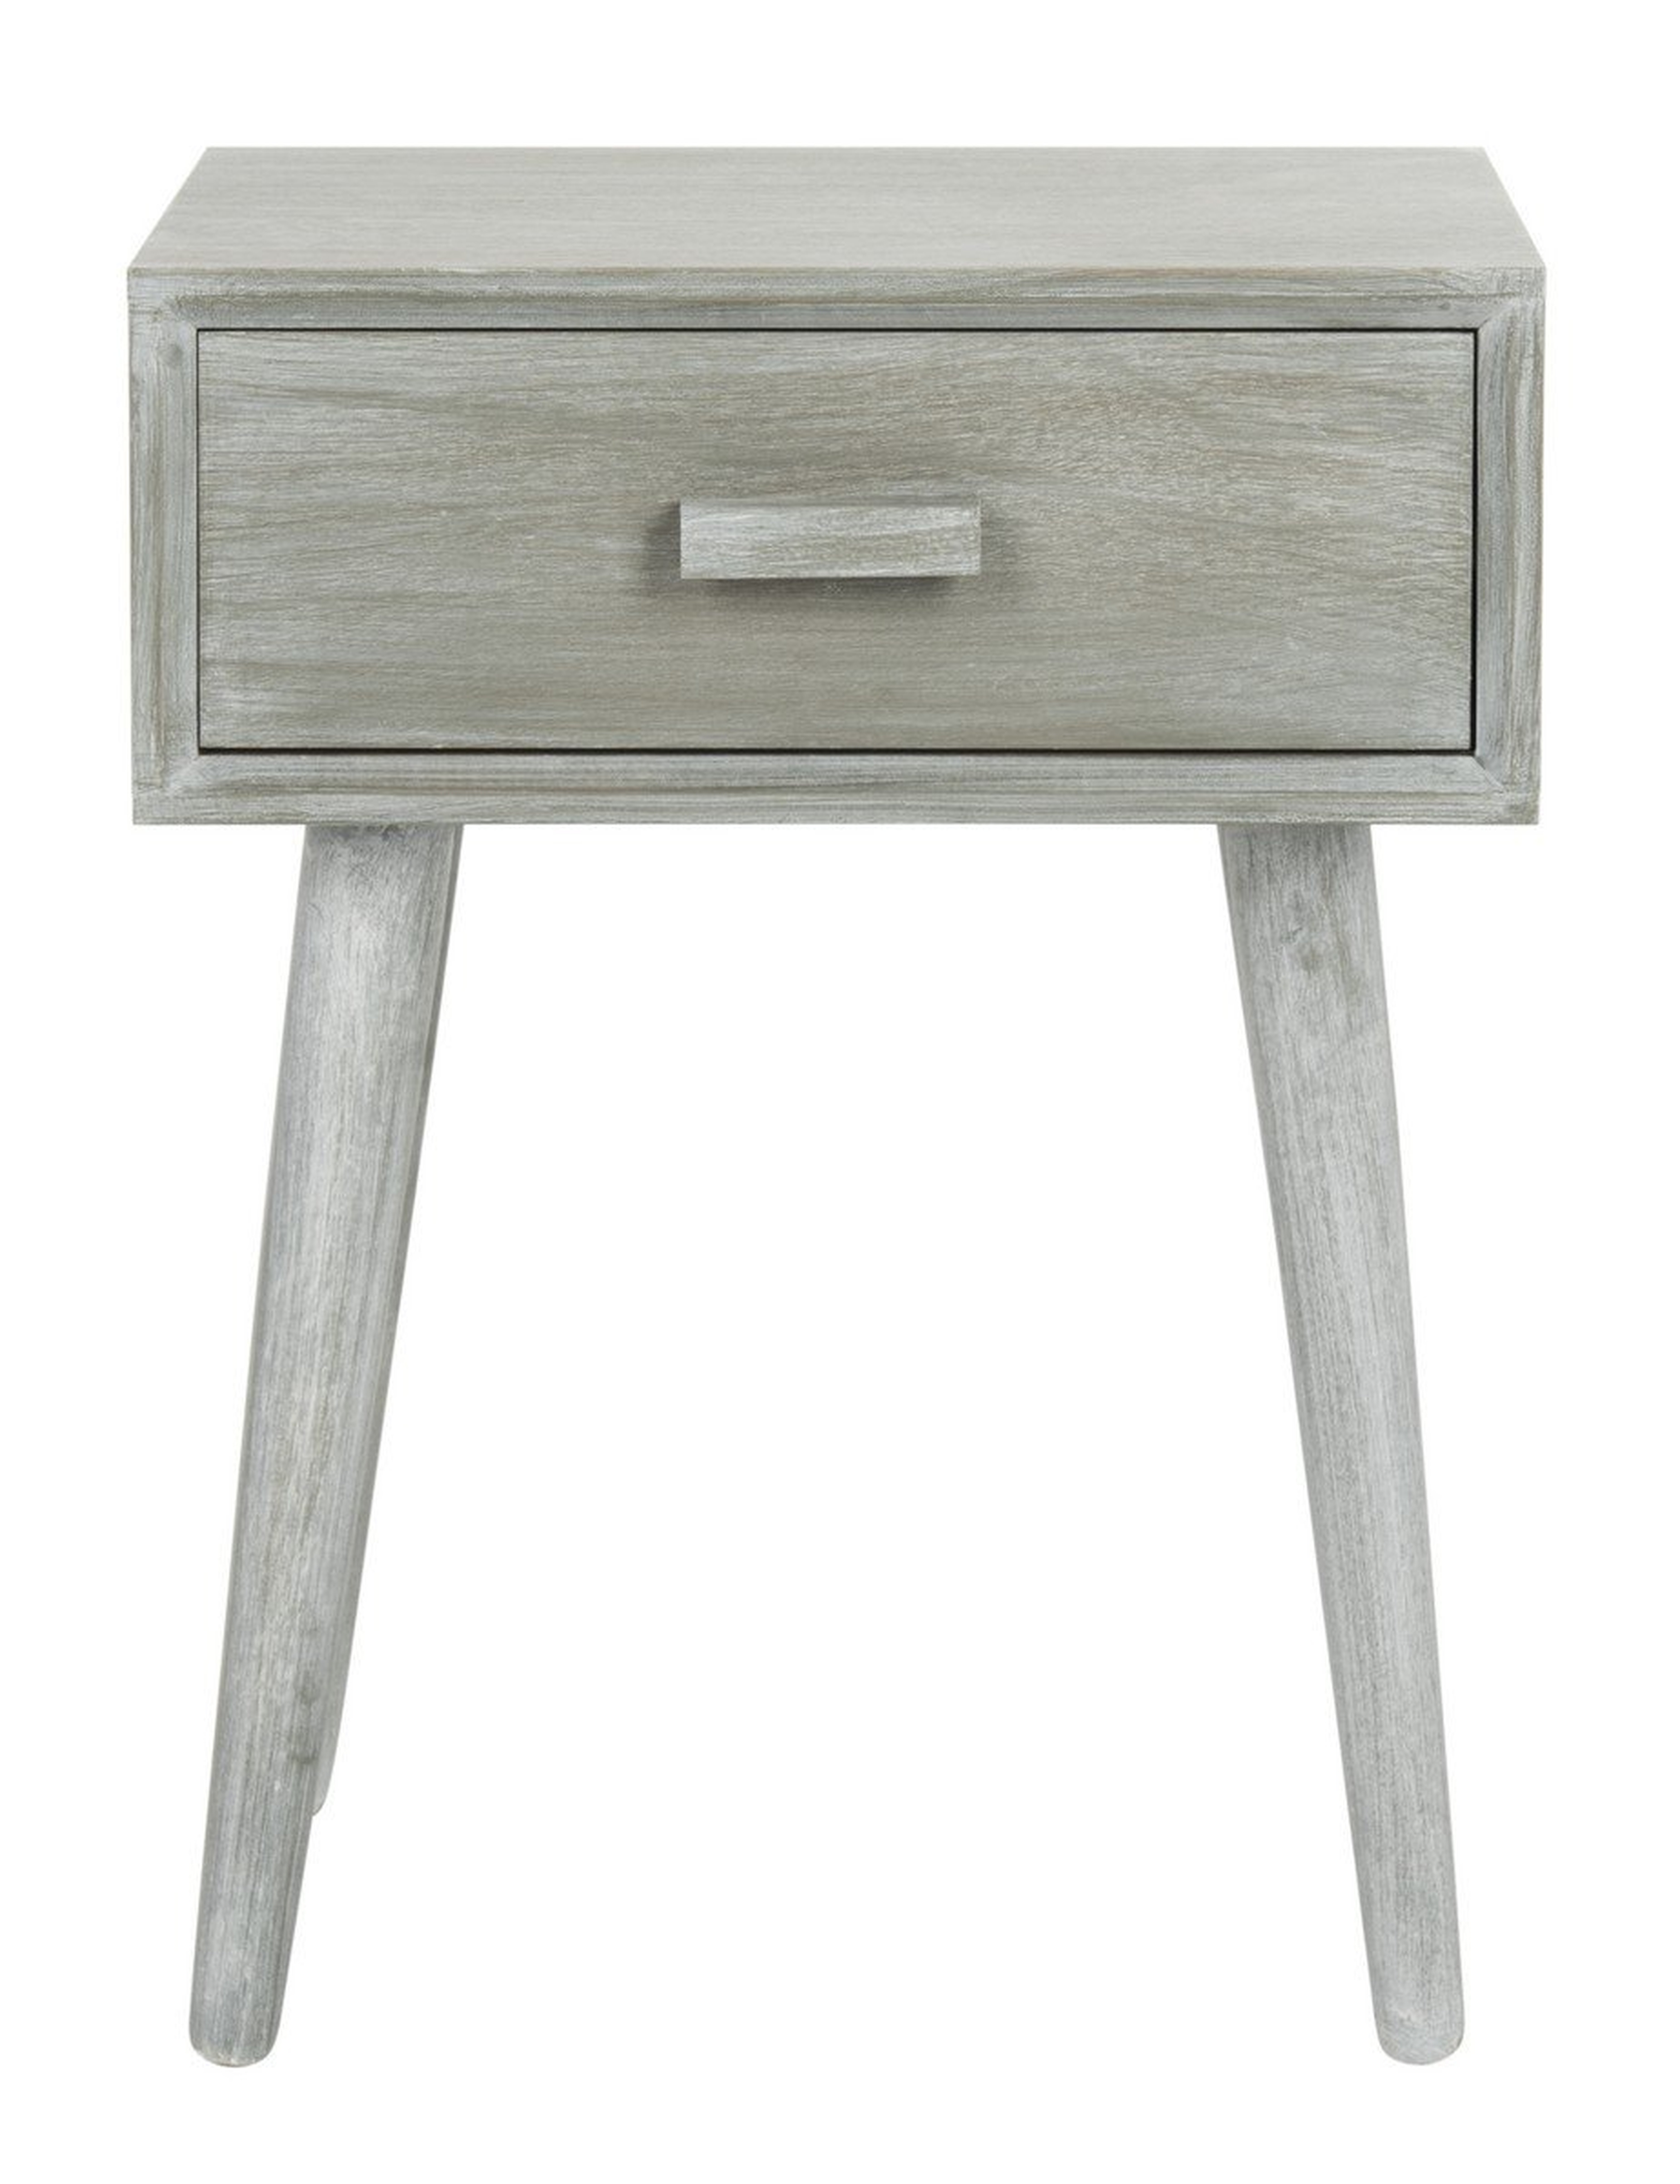 Lyle One Drawer Side Table - Slate/Grey - Arlo Home - Arlo Home